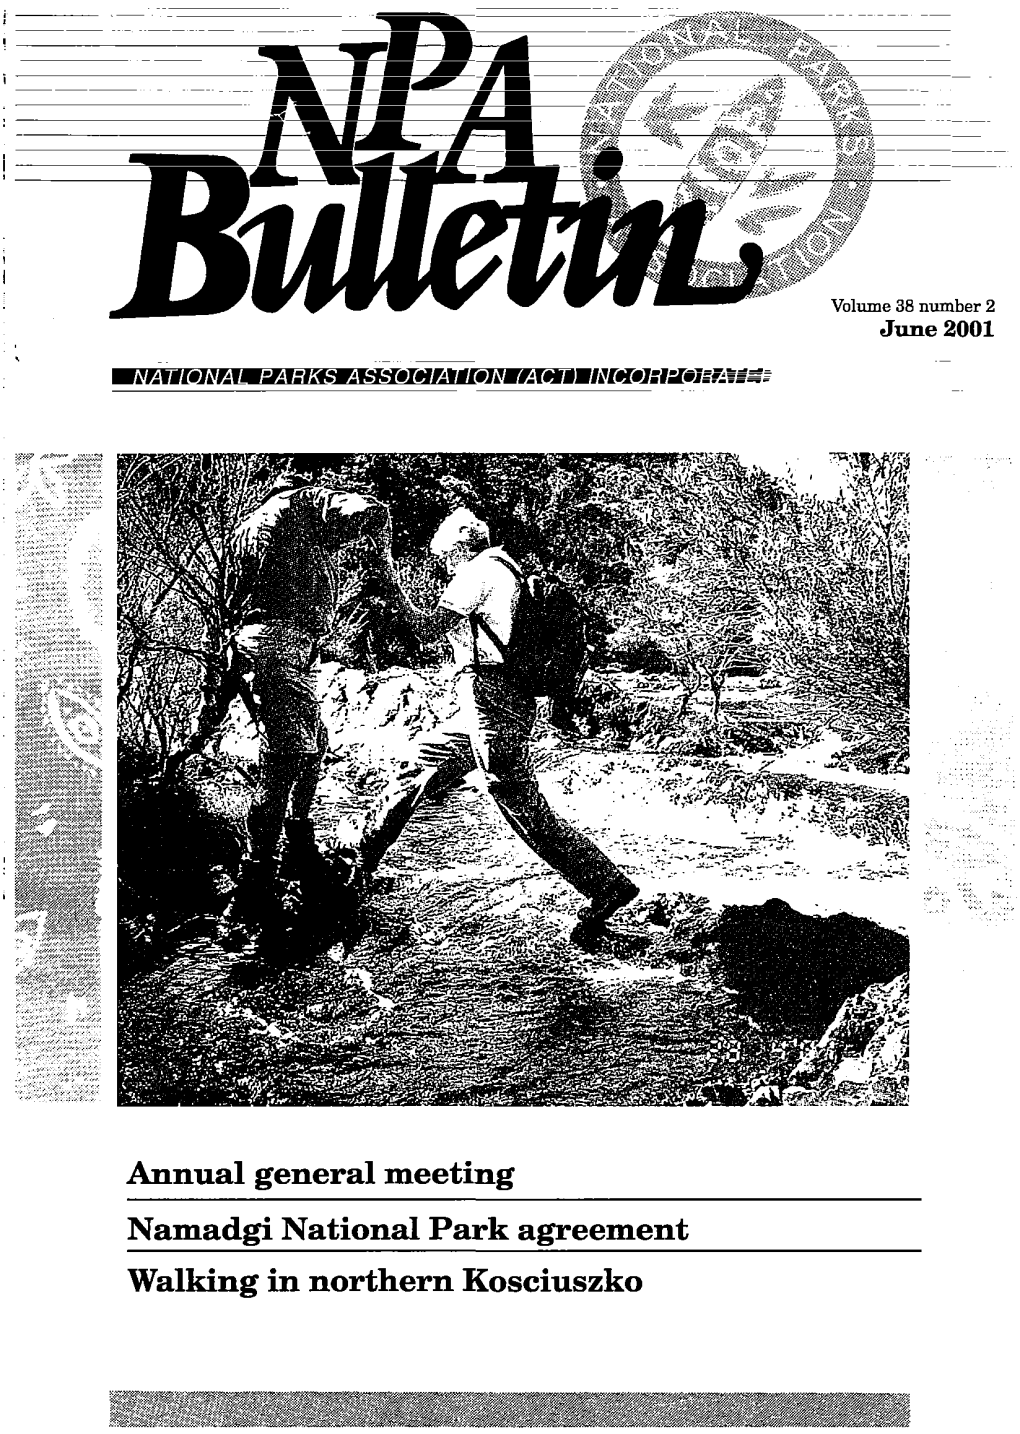 Annual General Meeting Namadgi National Park Agreement Walking in Northern Kosciuszko NPA BULLETIN Volume 38 Number 2 June 2001